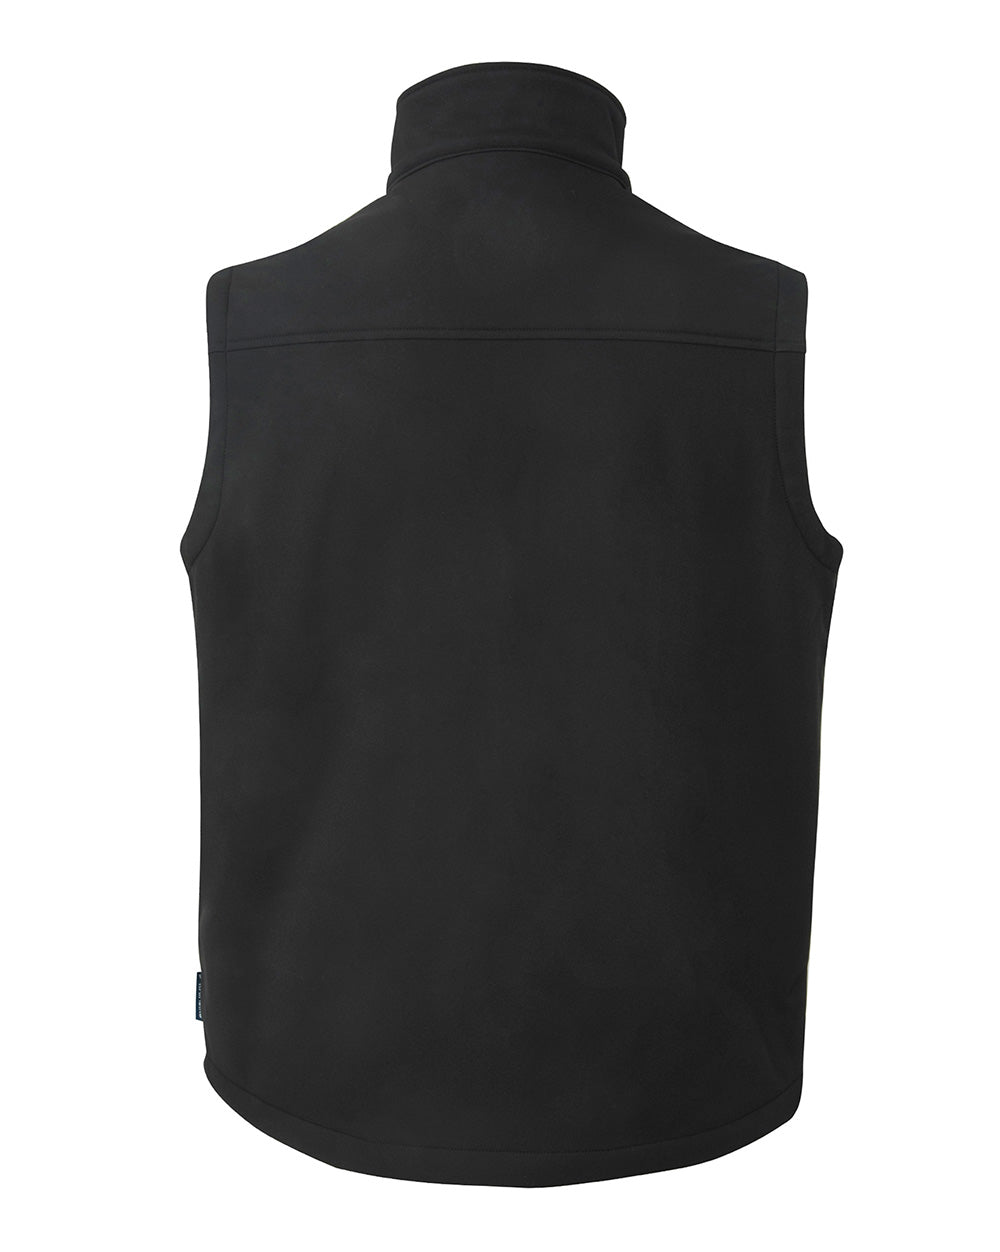 Bevan Vest in Black